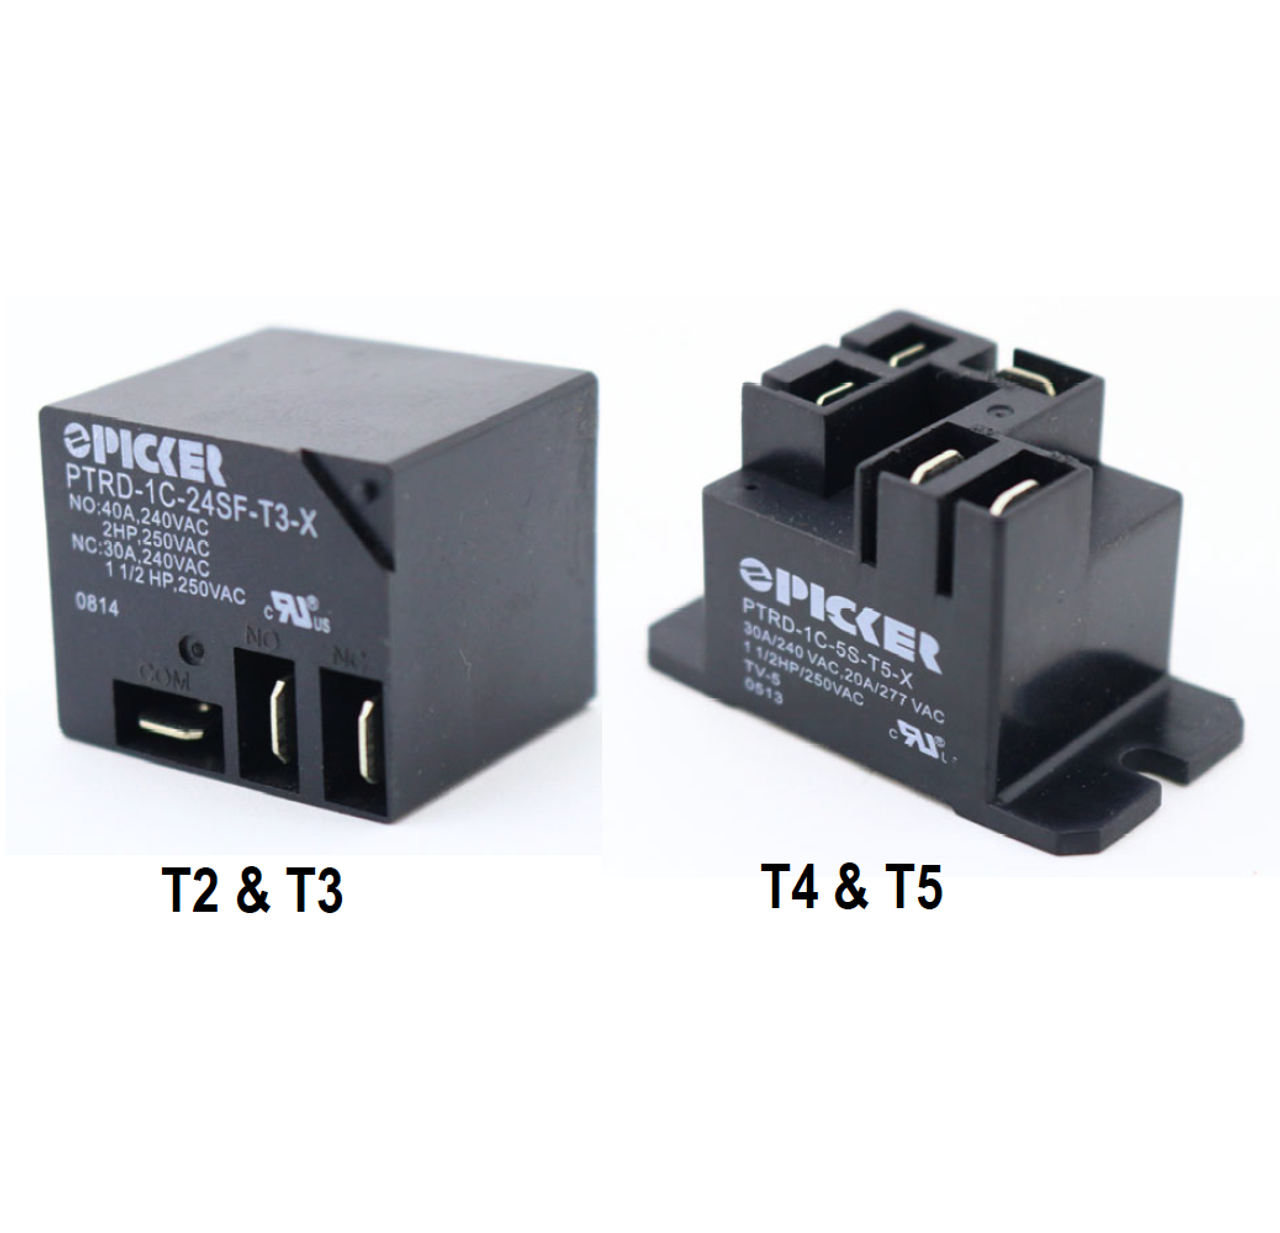 Picker PTRD-1A-18ST-T4-X-A0.6G Power Relays